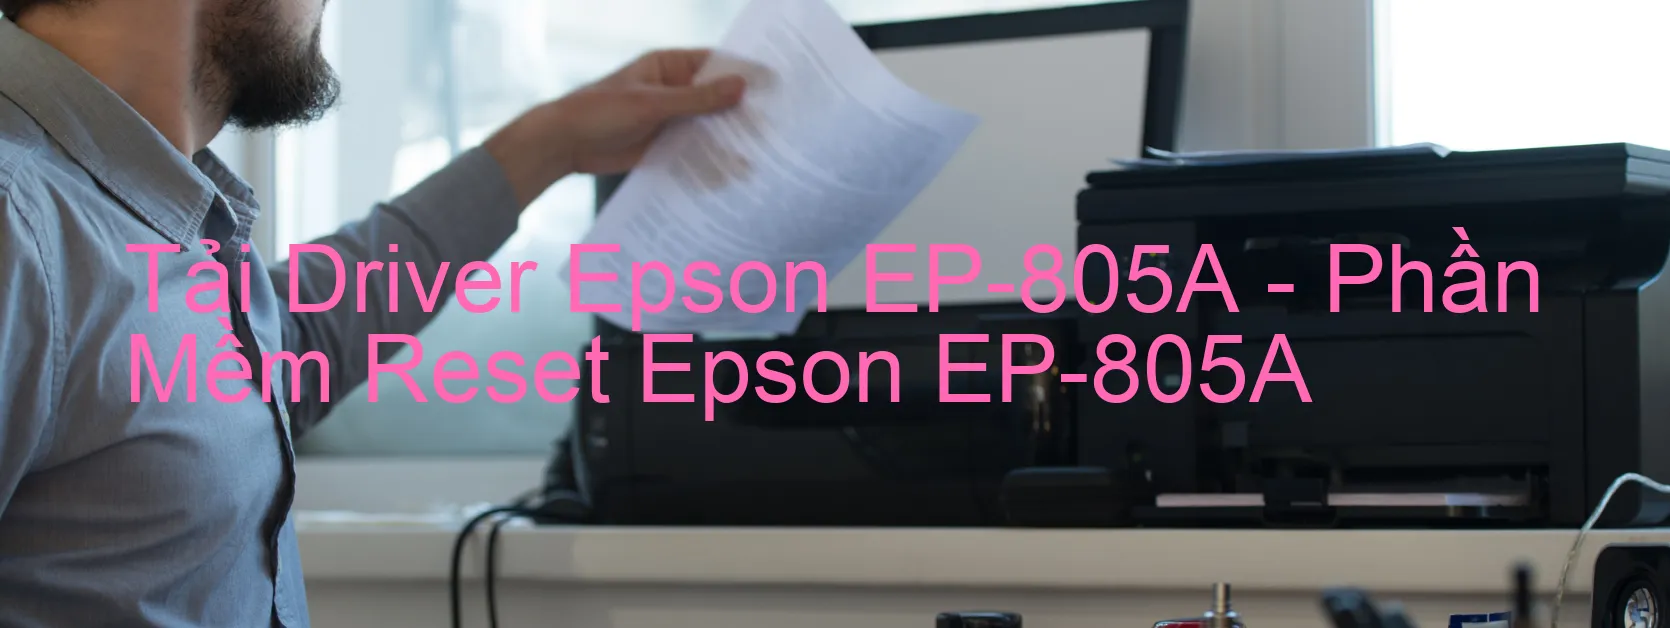 Driver Epson EP-805A, Phần Mềm Reset Epson EP-805A